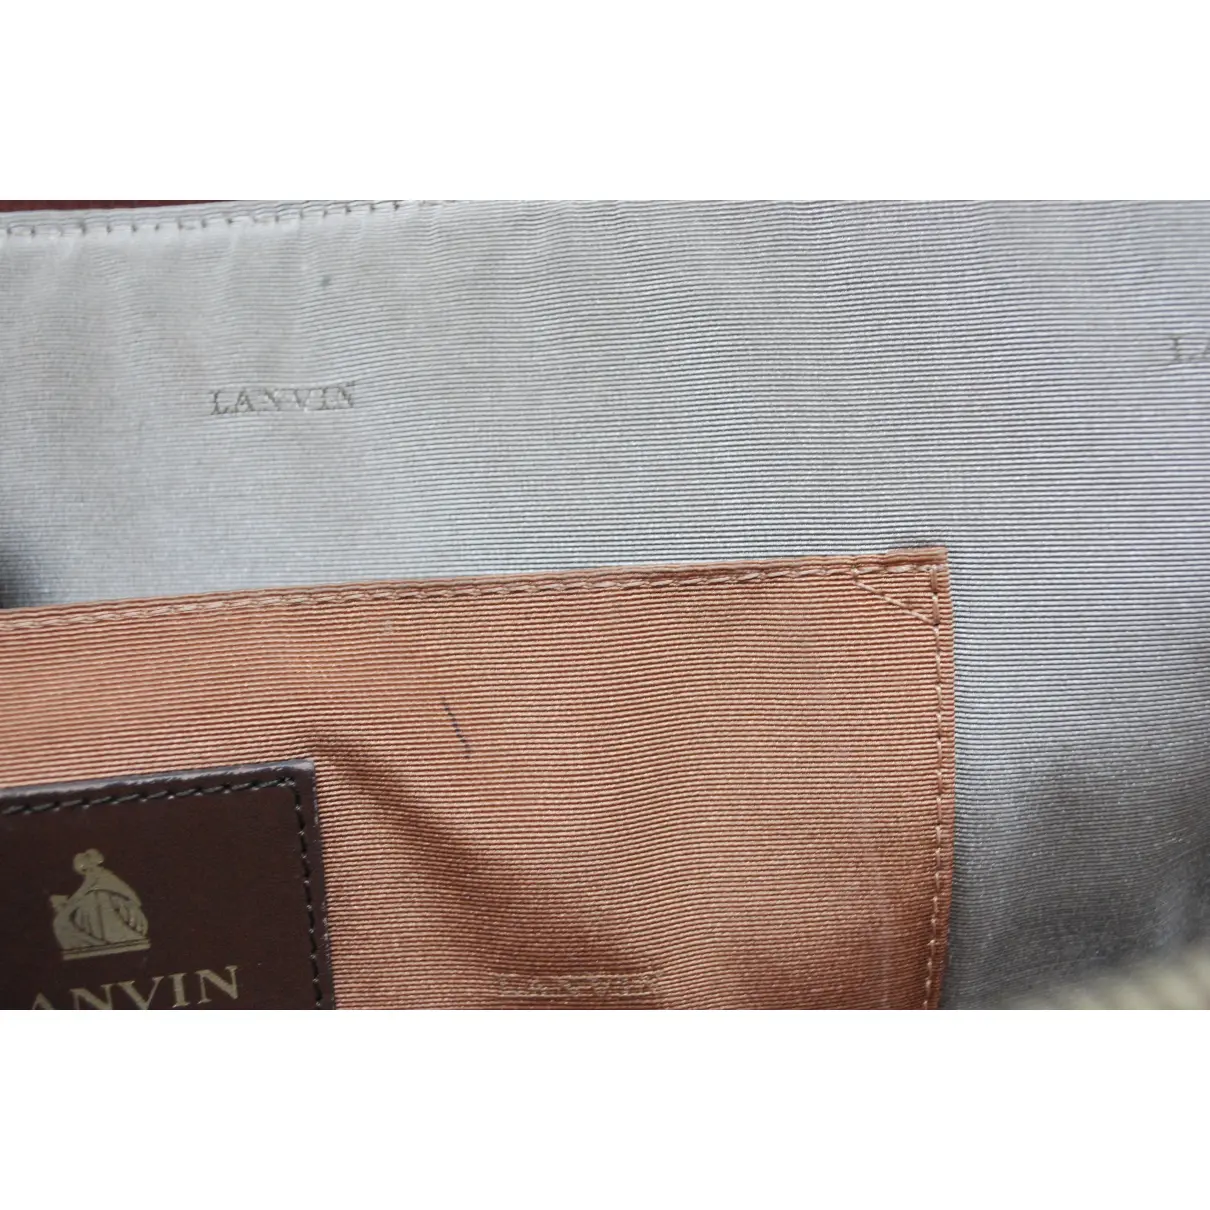 Leather clutch bag Lanvin